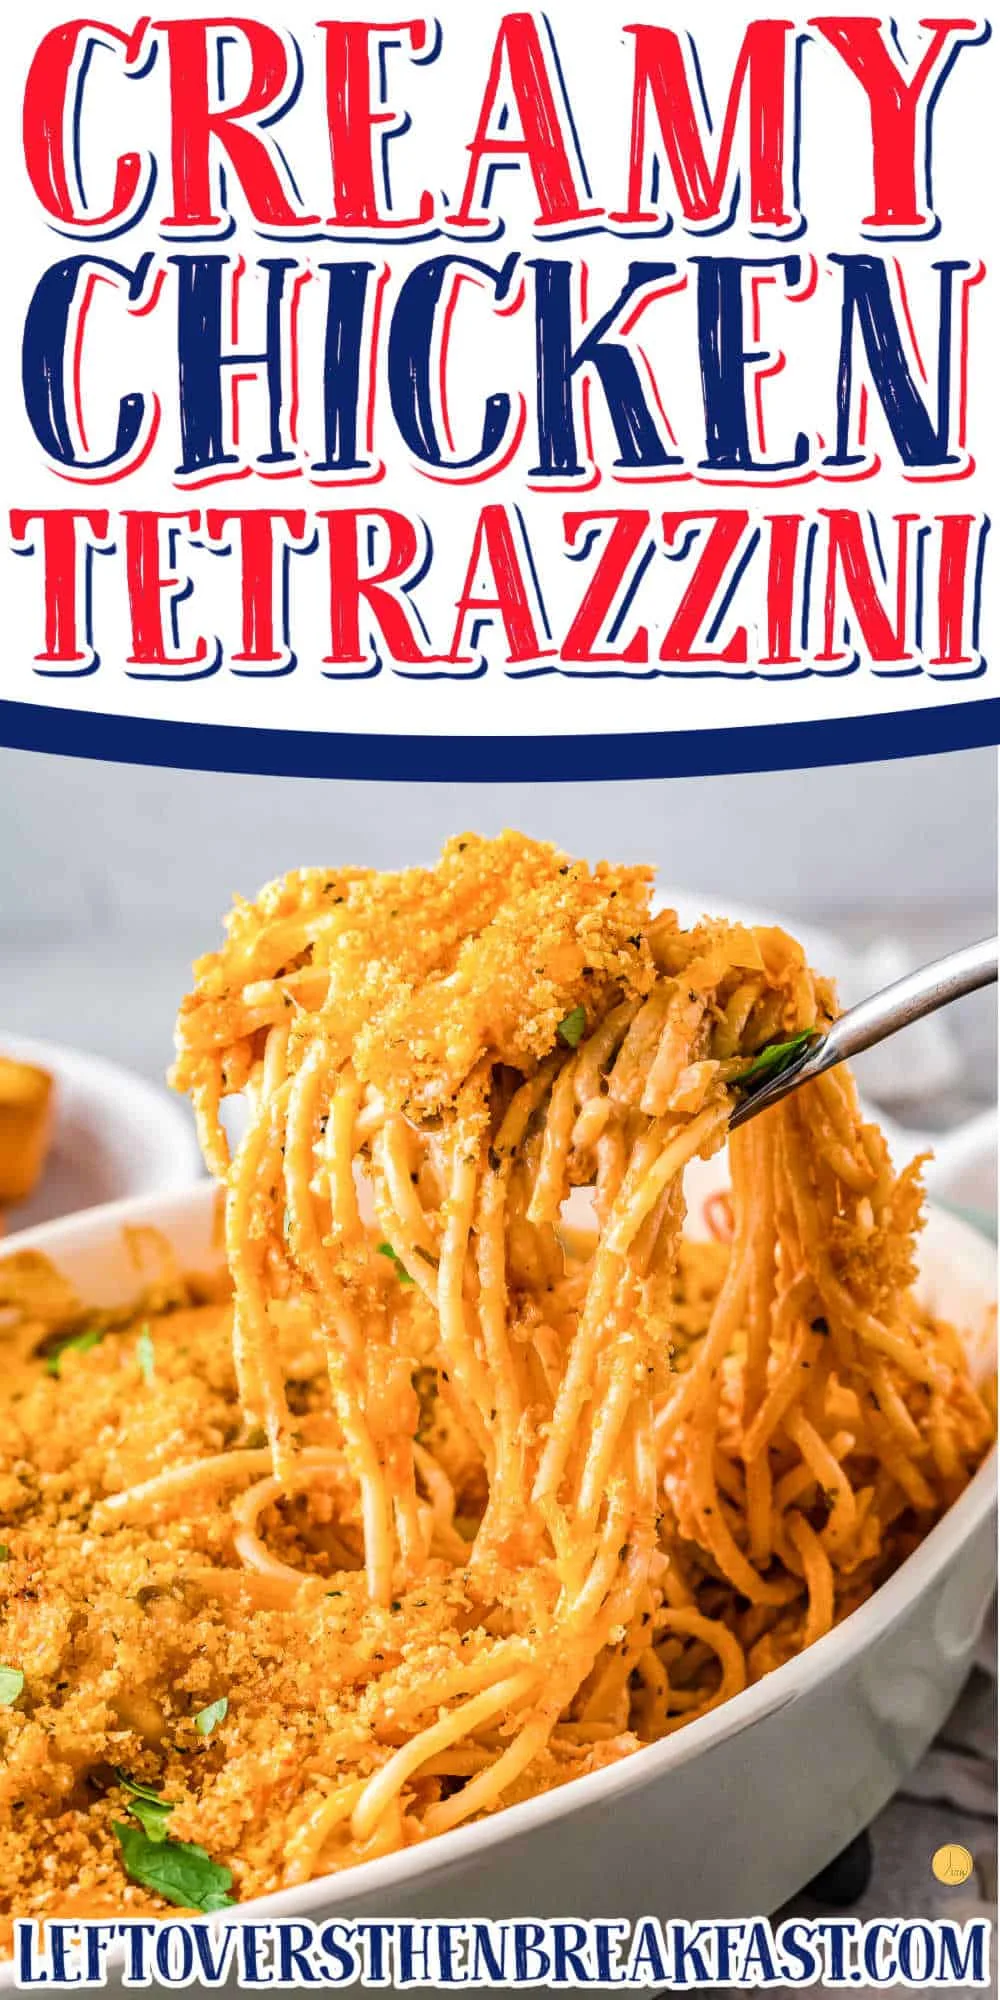 scoop of pasta casserole with text "creamy chicken tetrazzini"